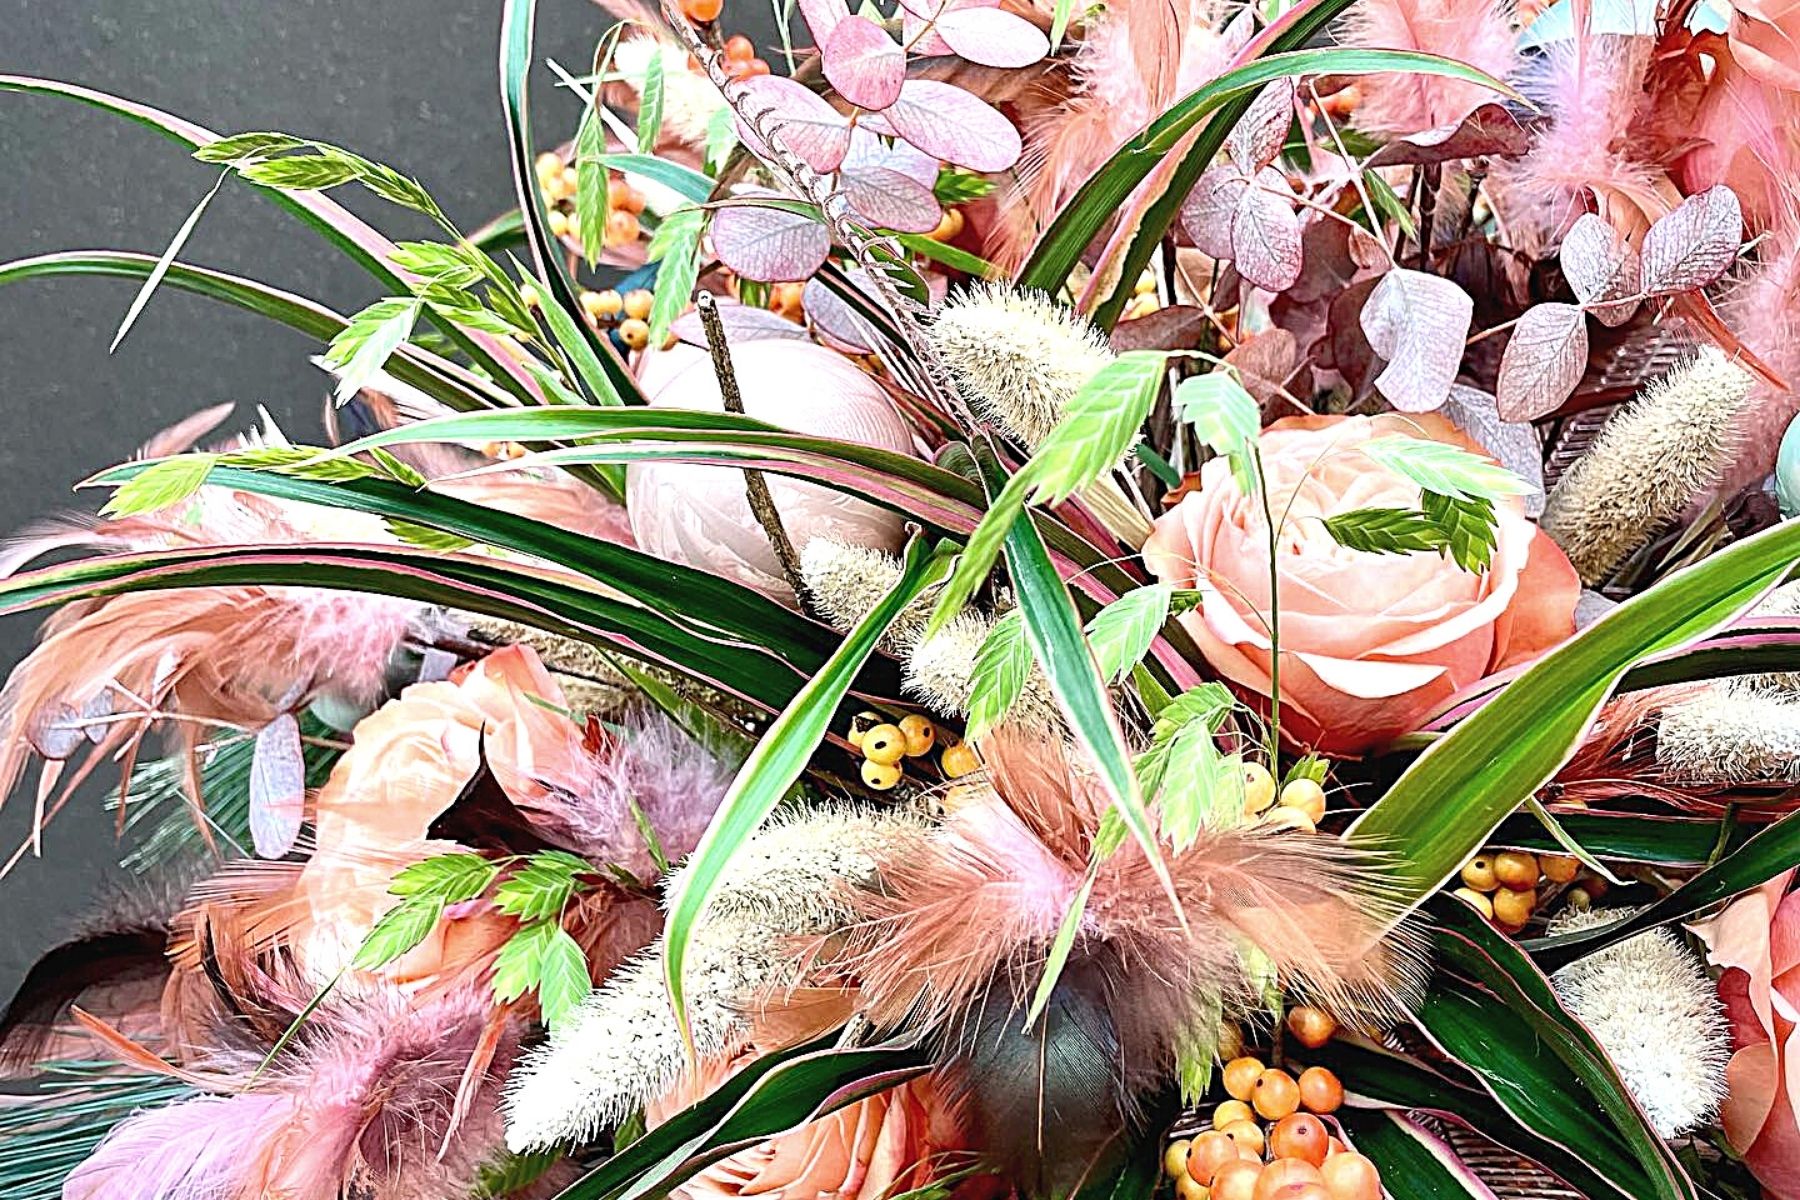 Genuine Pink Scented Orchids as Inspiration for X-Mas Designs - Alex Segura - Blog on Thursd (5)